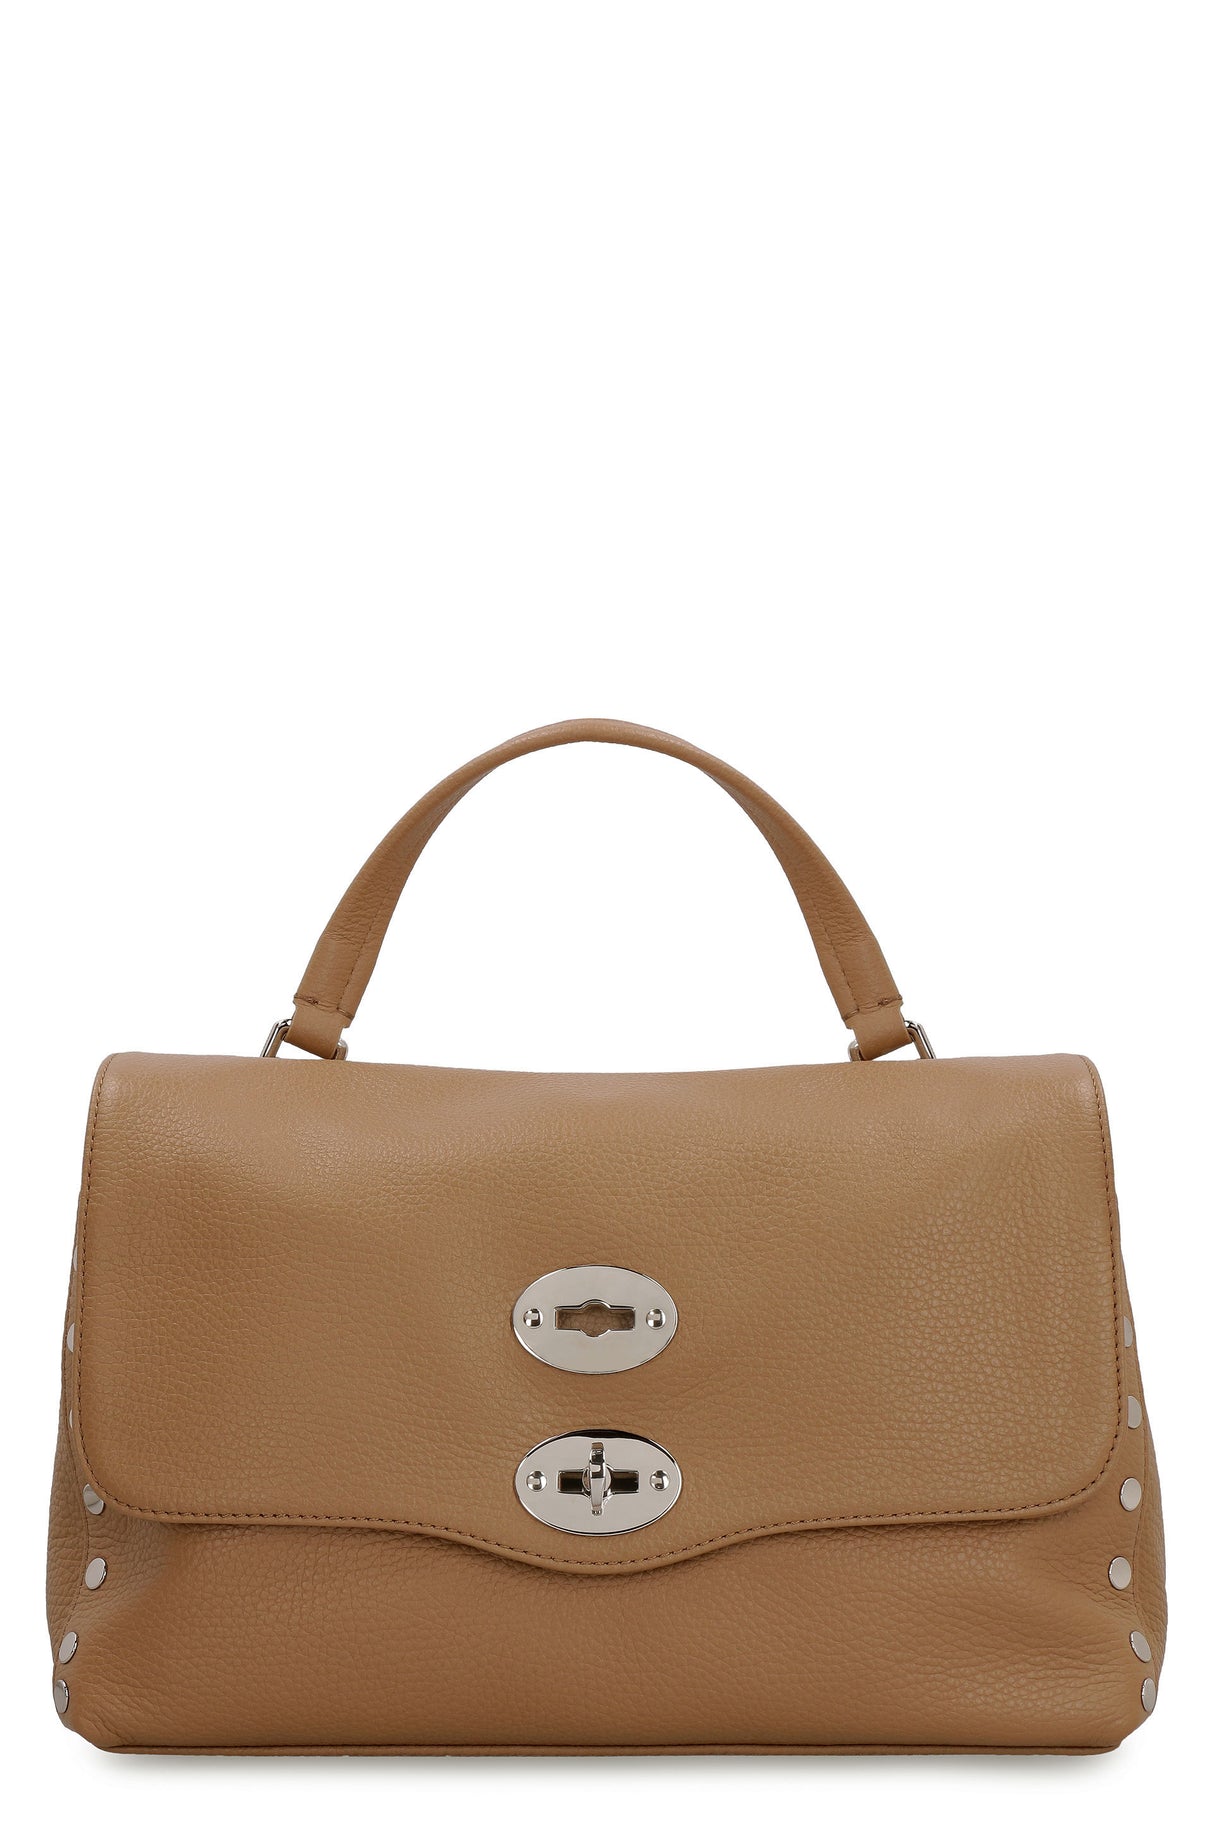 ZANELLATO Stylish and Functional Leather Postman Handbag for Women